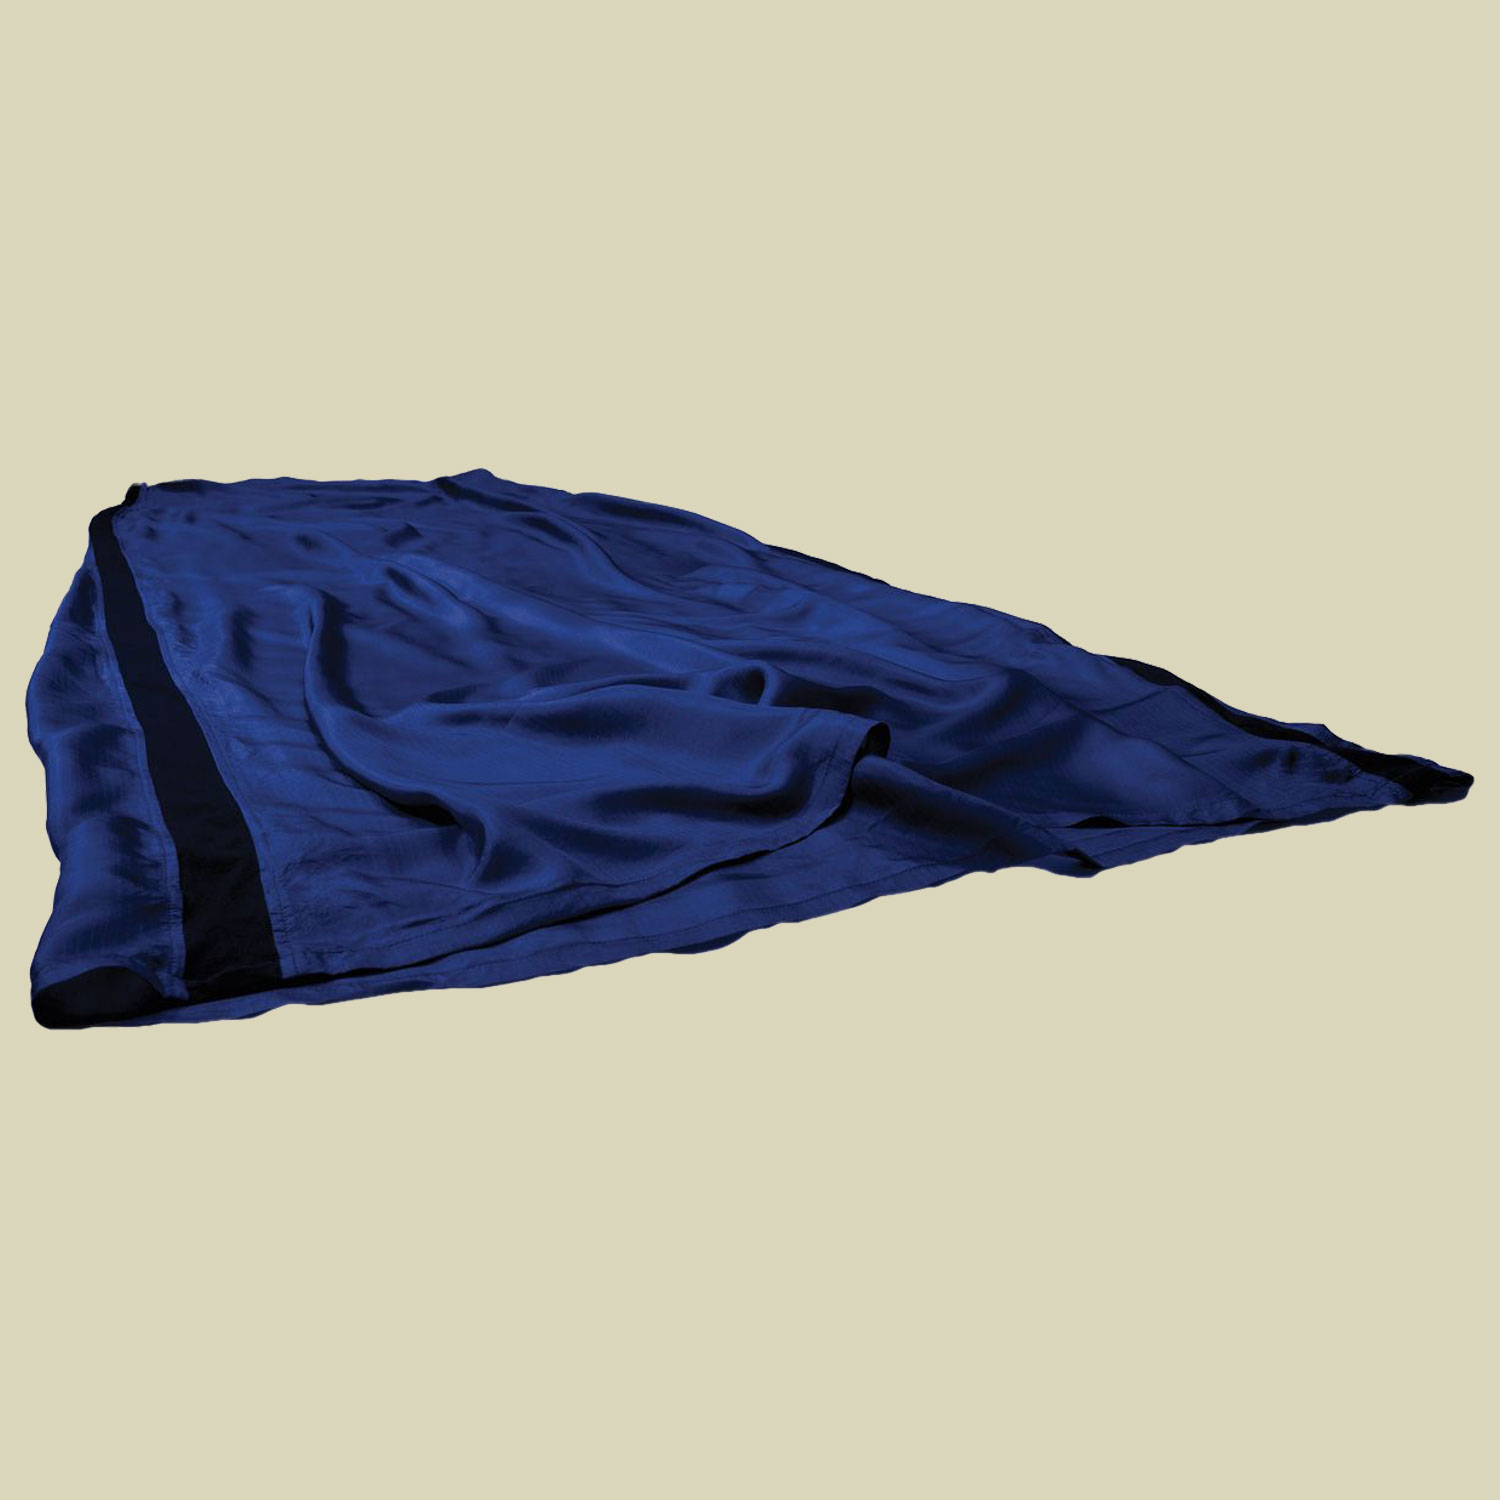 Silk Stretch Liner - Traveller (with Pillow Slip) Maße 225 x 92 cm Farbe navy blue